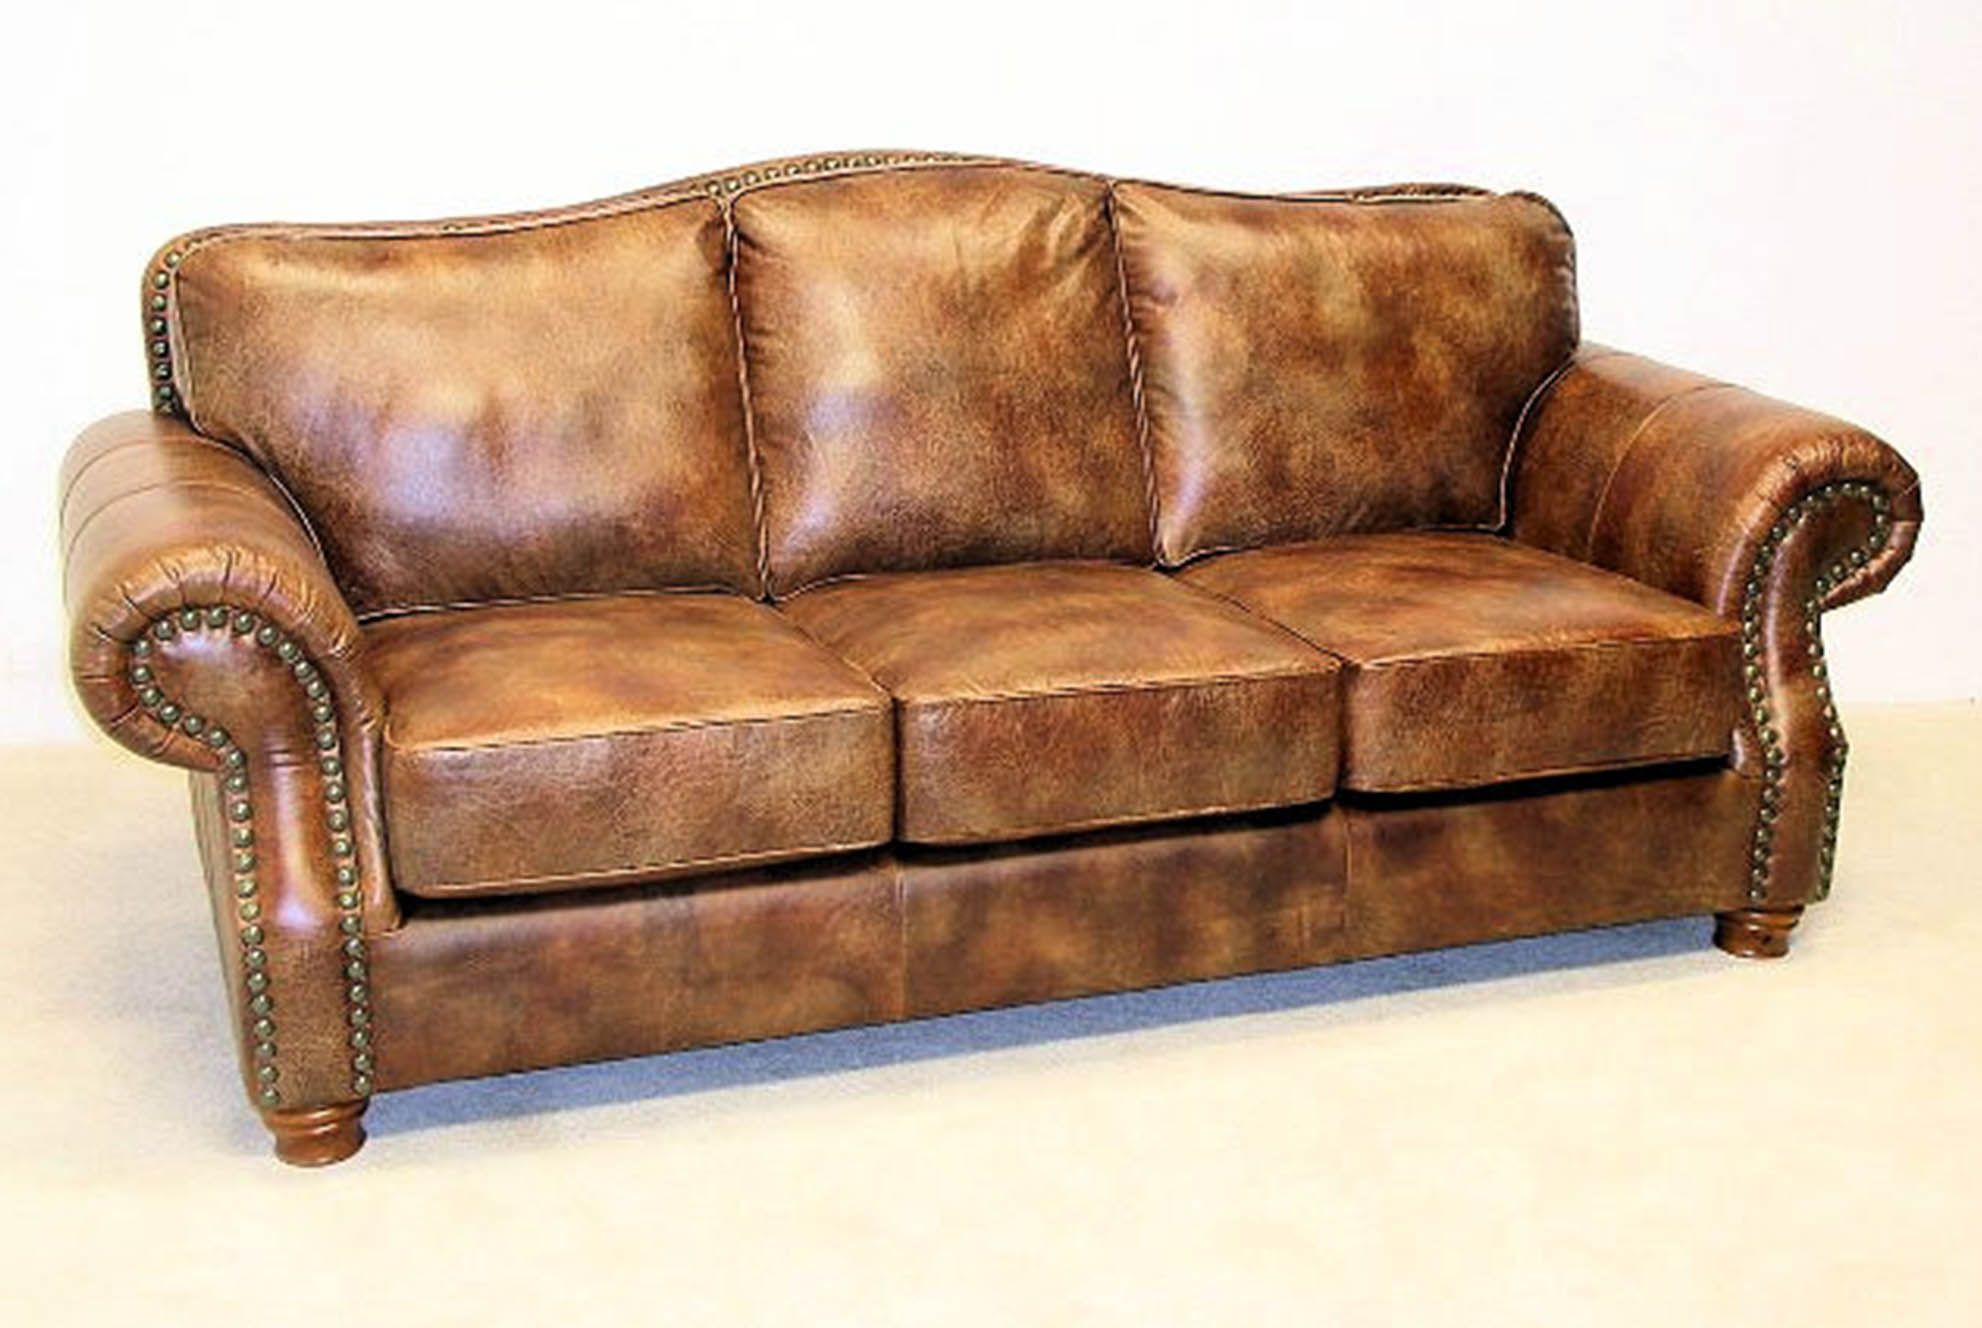 tips merawat sofa kulit - jenis bahan kuli unfinished leather